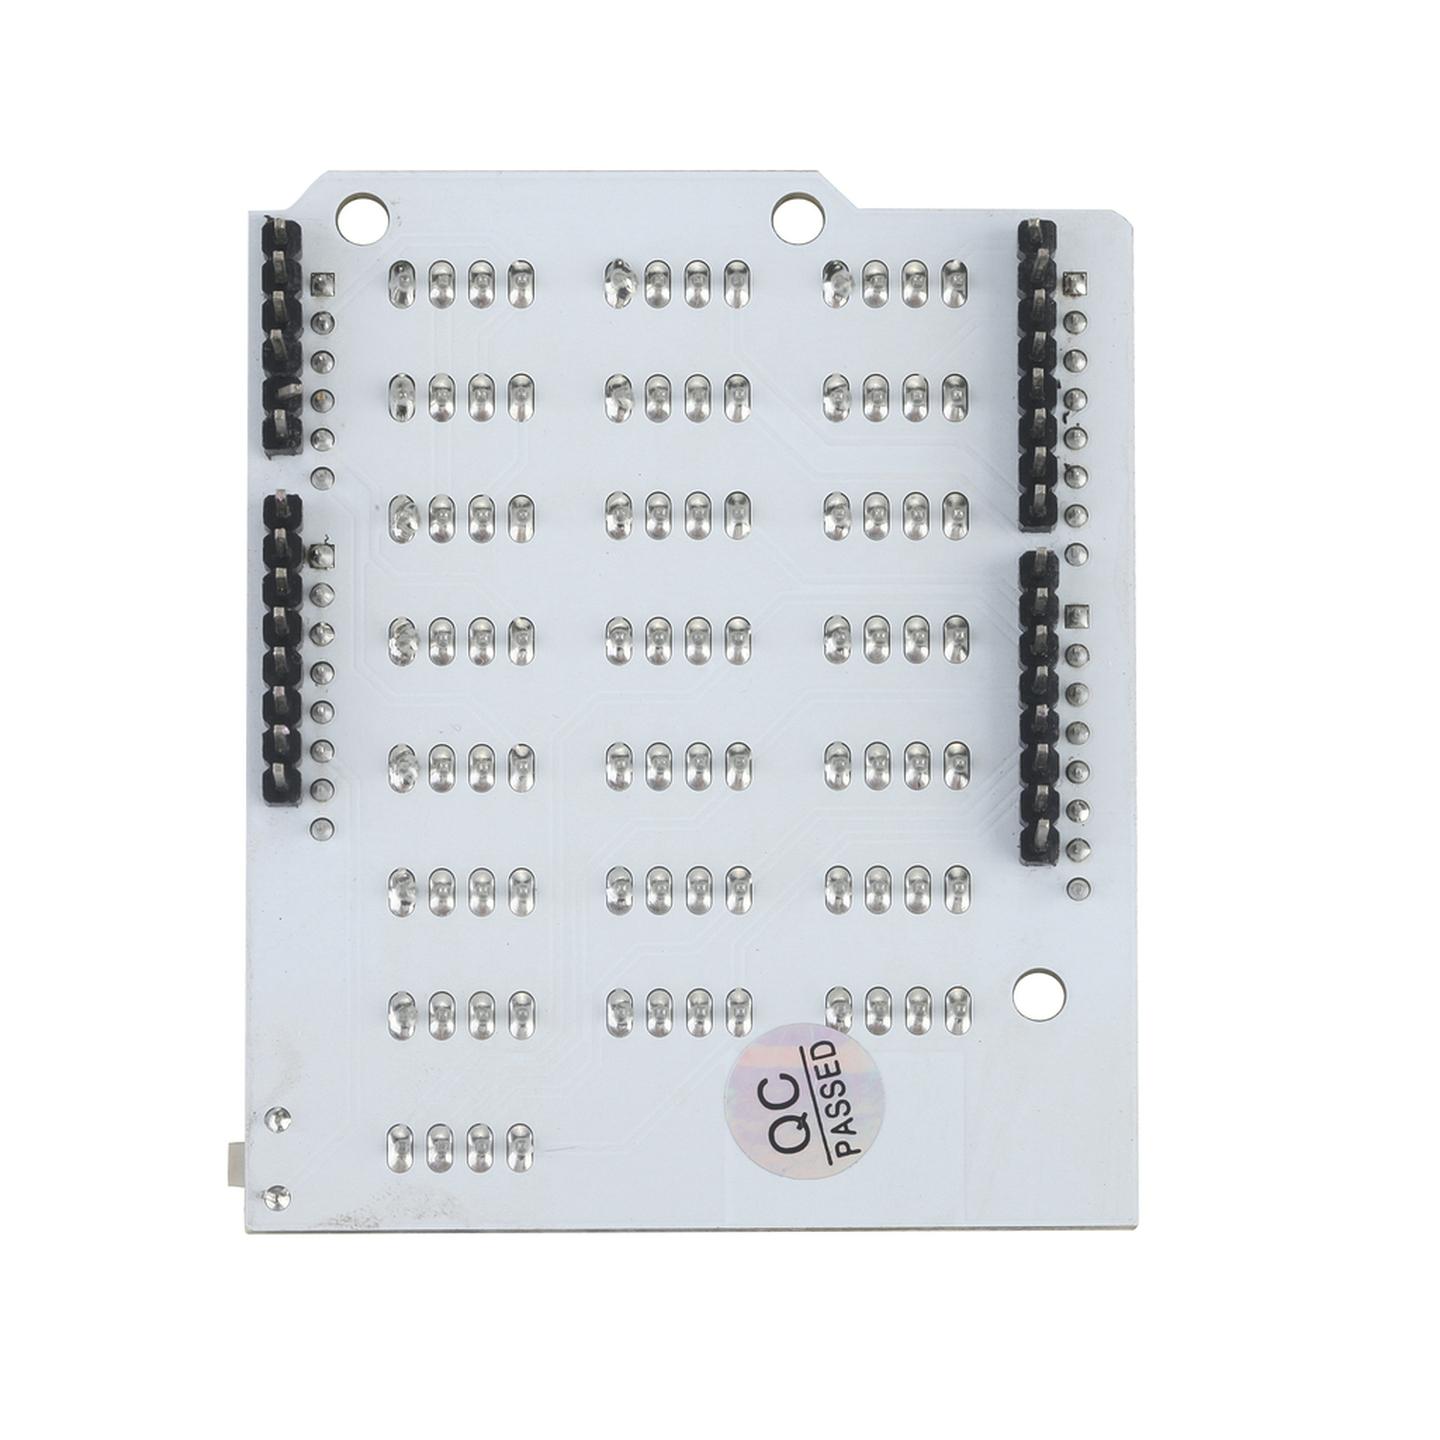 Duinotech Arduino Compatible Linker Base Shield